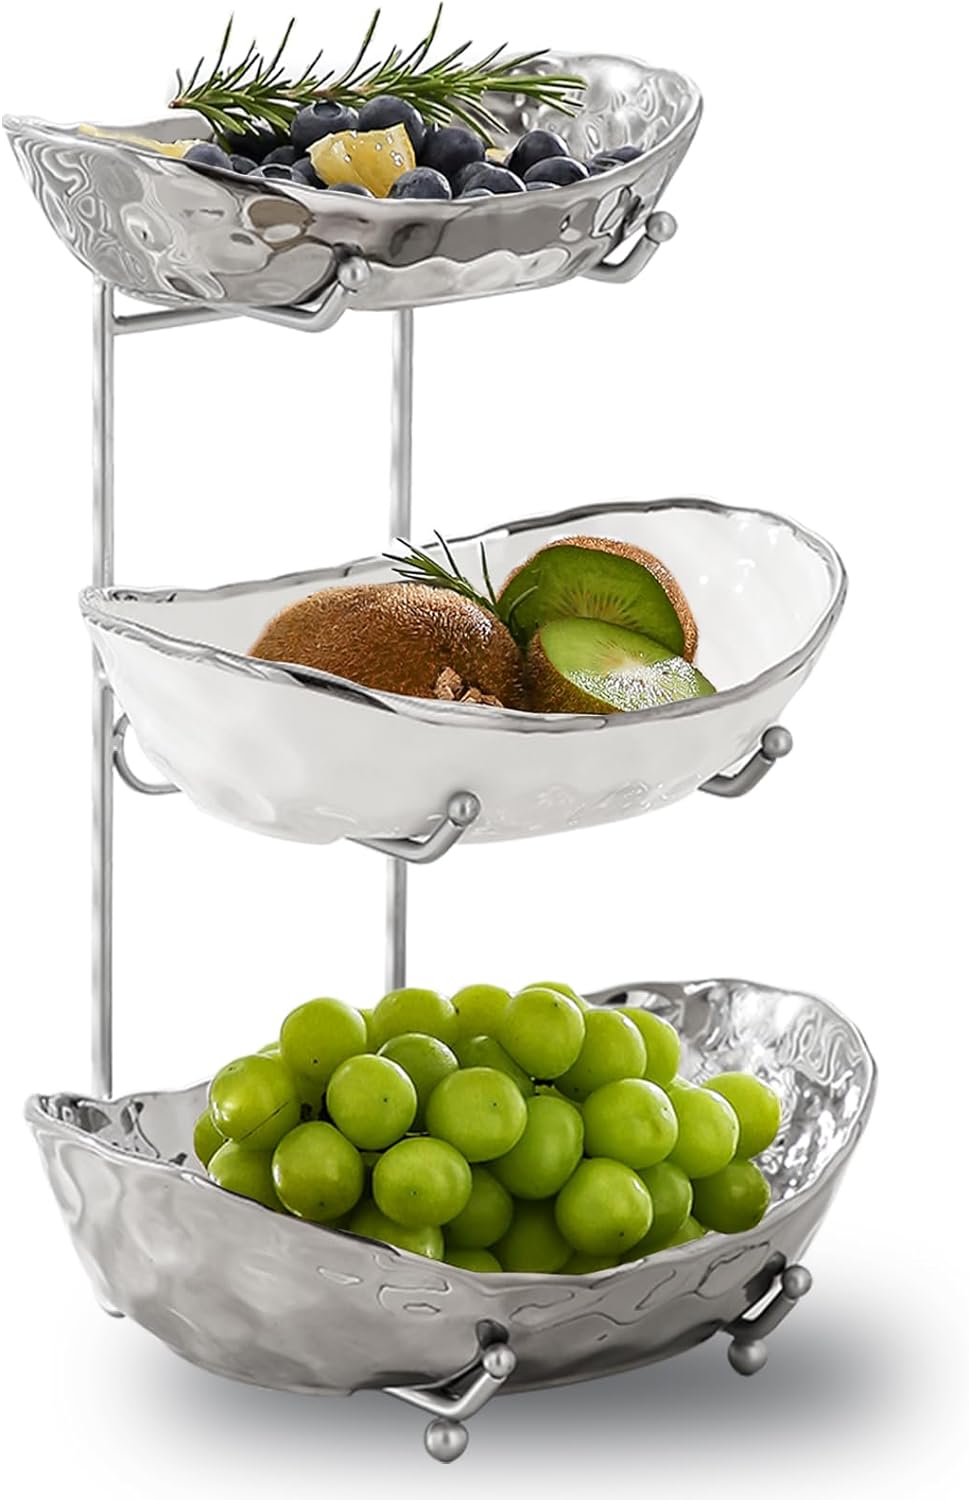 Fruit Bowl for Kitchen Counter - 3 Tier Ceramic Serving Bowls with Metal Stand, Tiered Fruit Basket (Sliver)